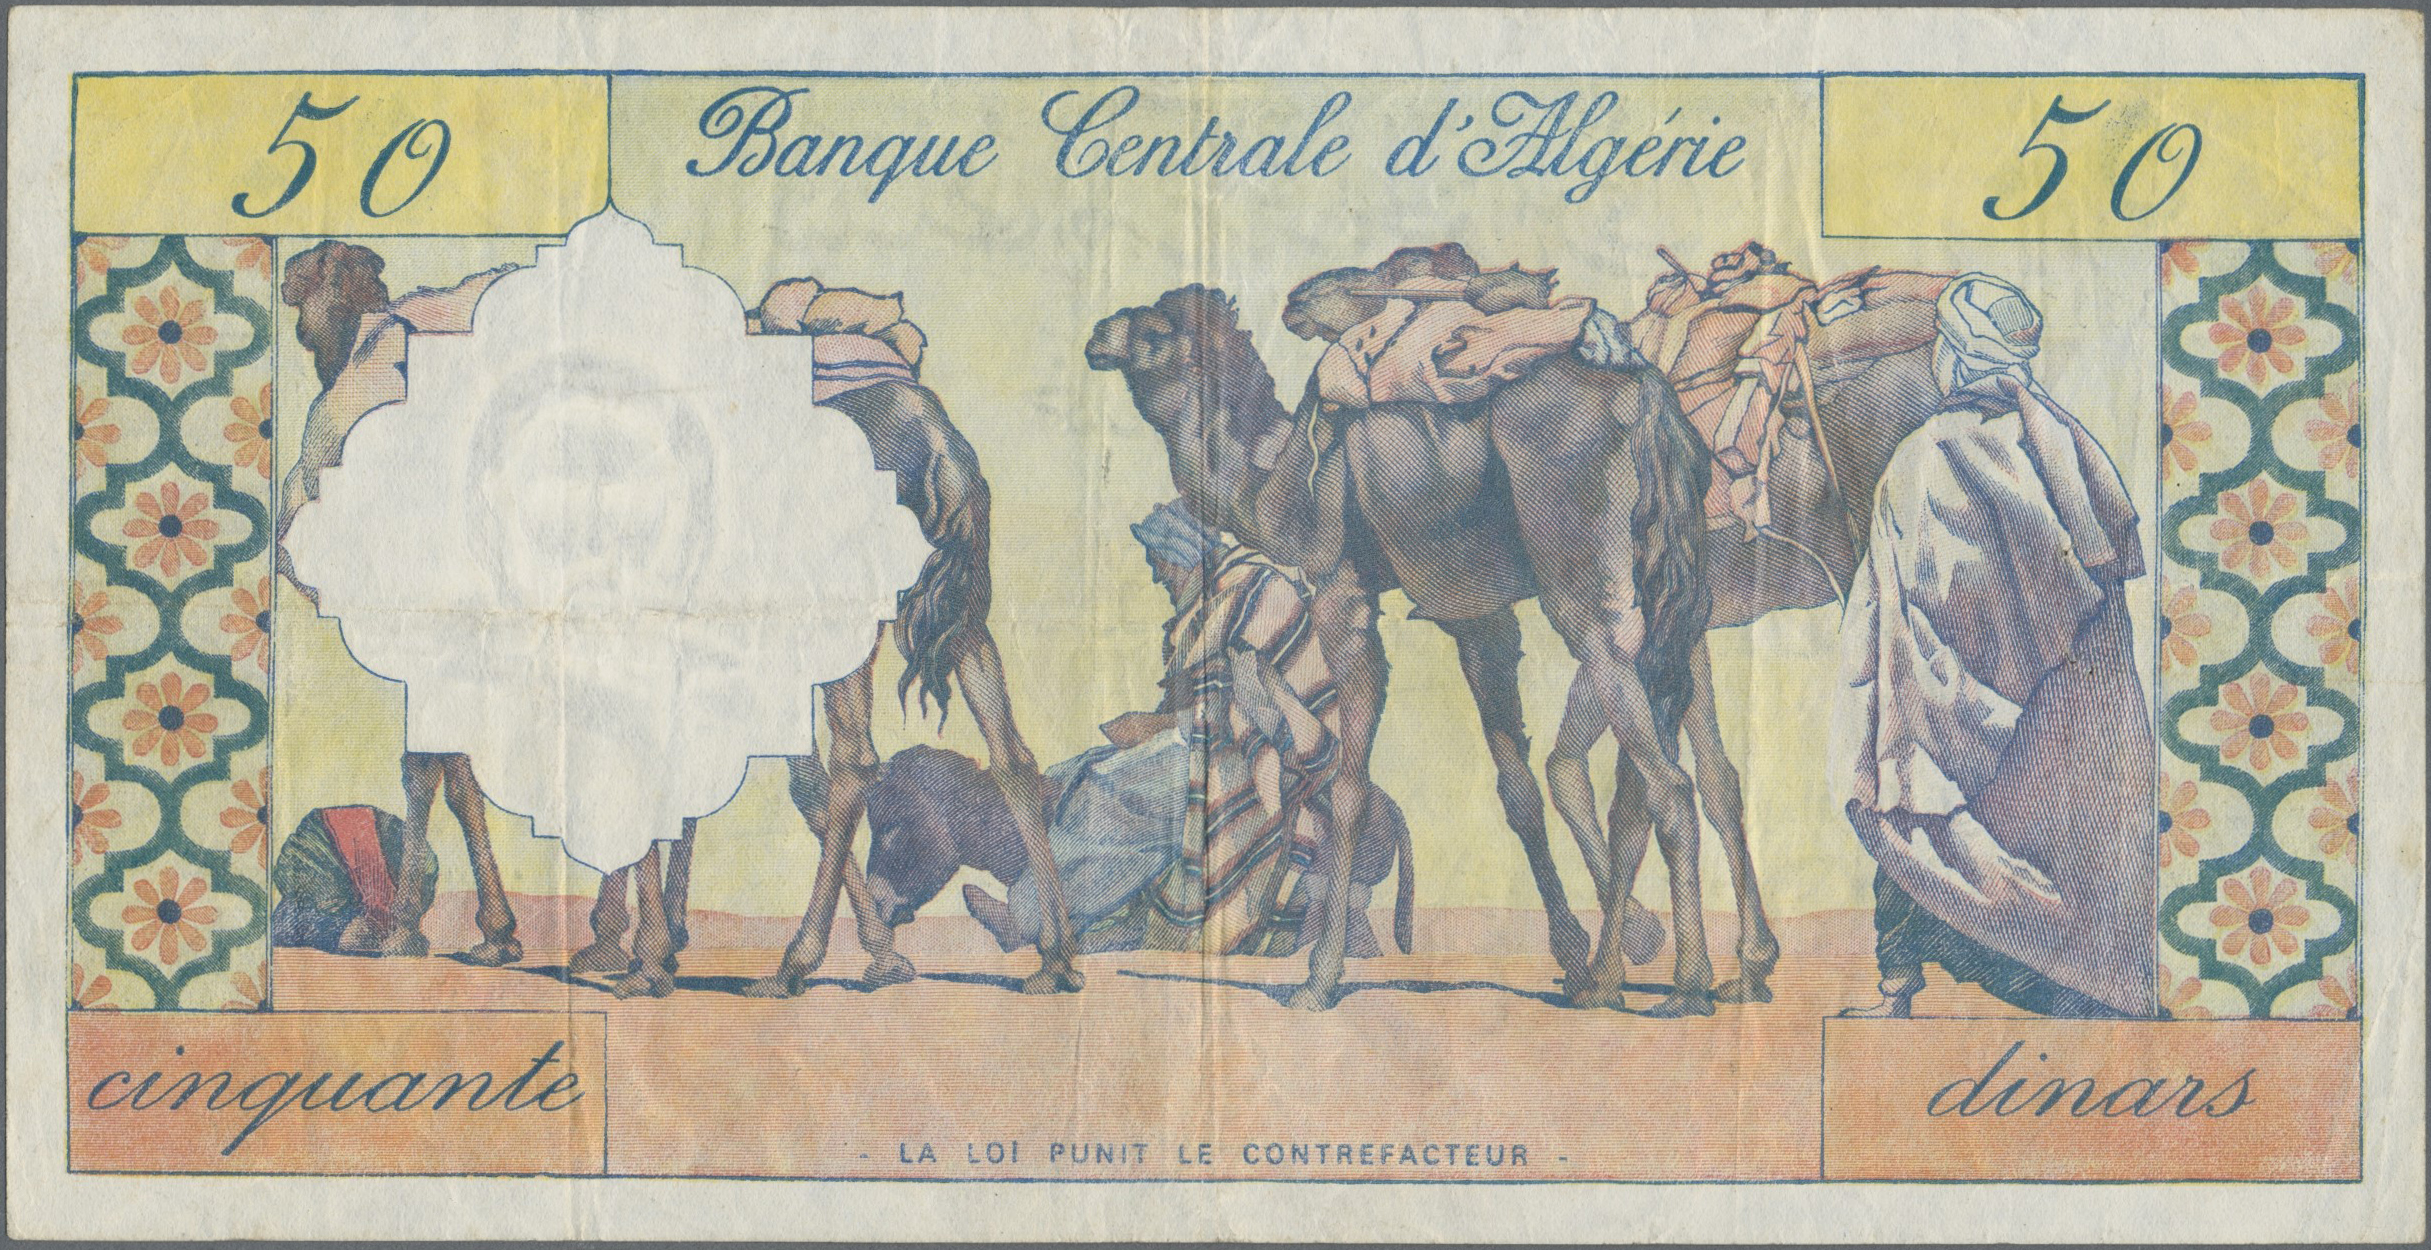 Lot 00024 - Algeria / Algerien | Banknoten  -  Auktionshaus Christoph Gärtner GmbH & Co. KG 55th AUCTION - Day 1